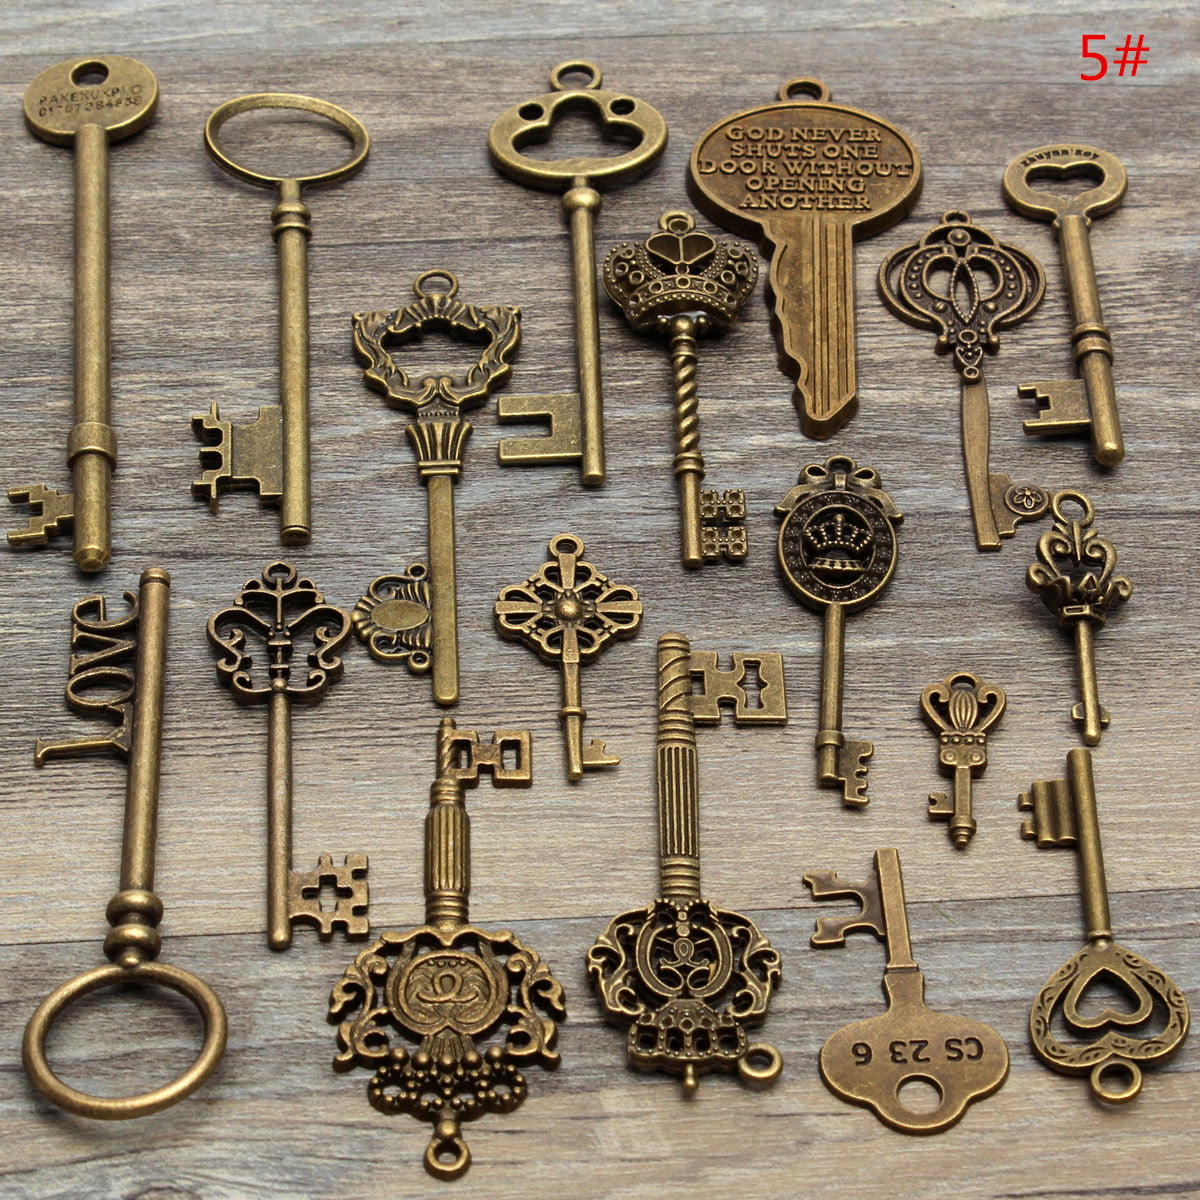 Old look antique vintage skeleton keys 3 colors craft steampunk jewelry 9 lot ab 